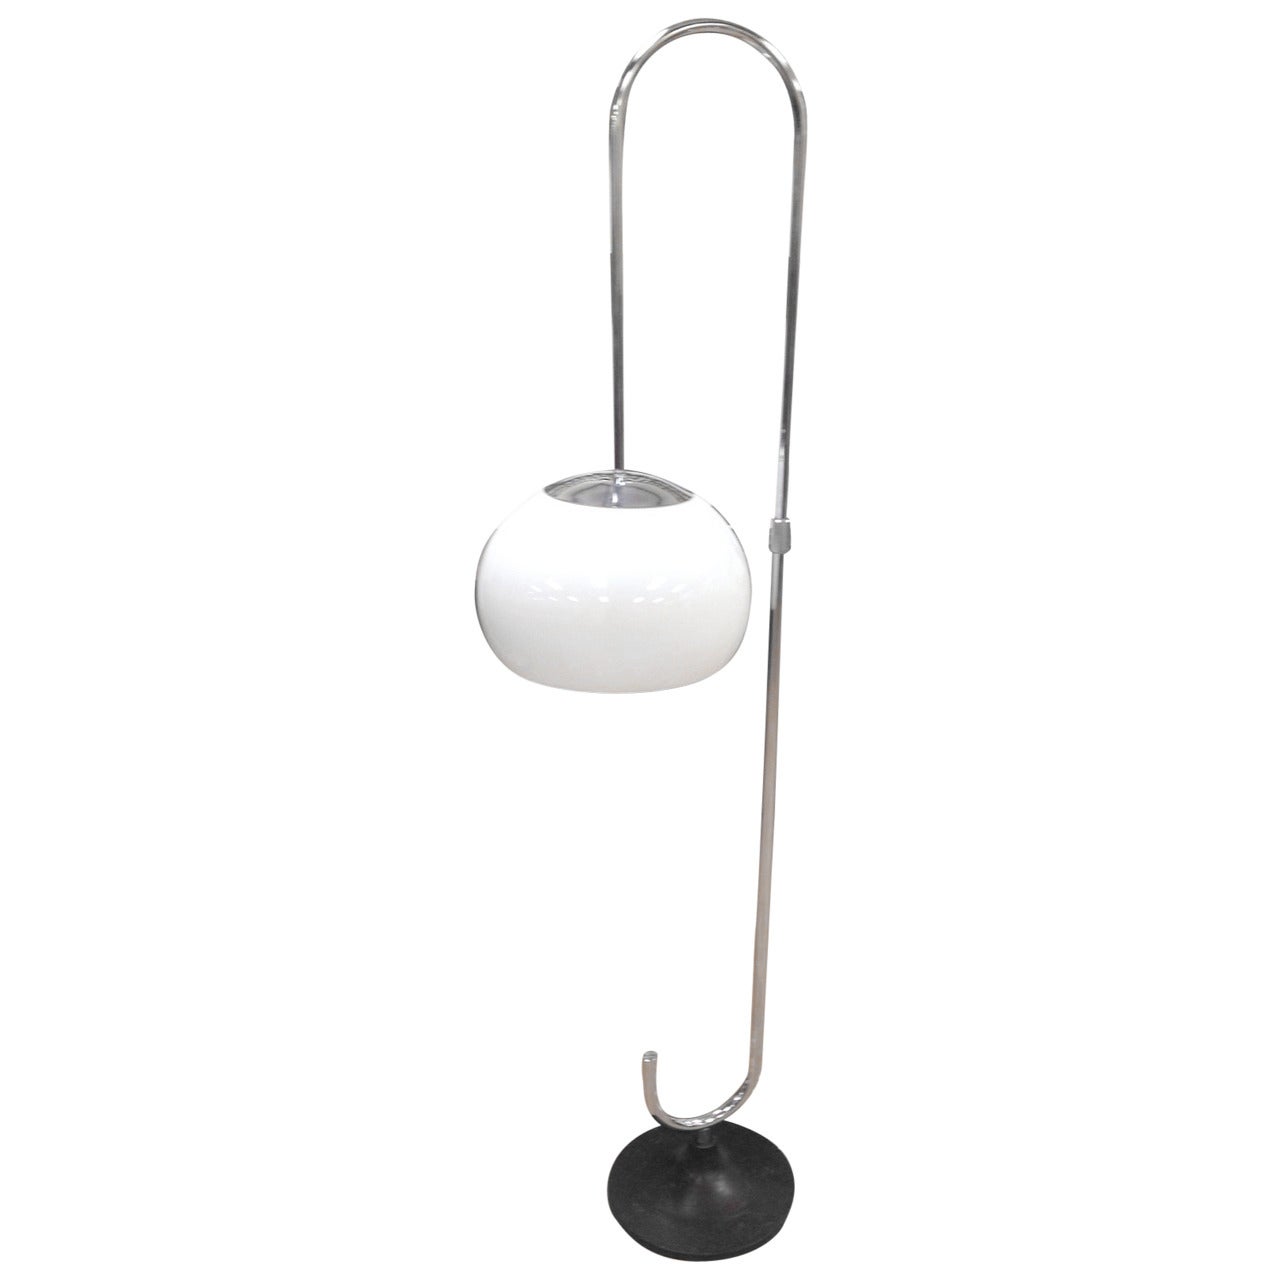 Adjustable Chrome Floor Lamp by Reggiani